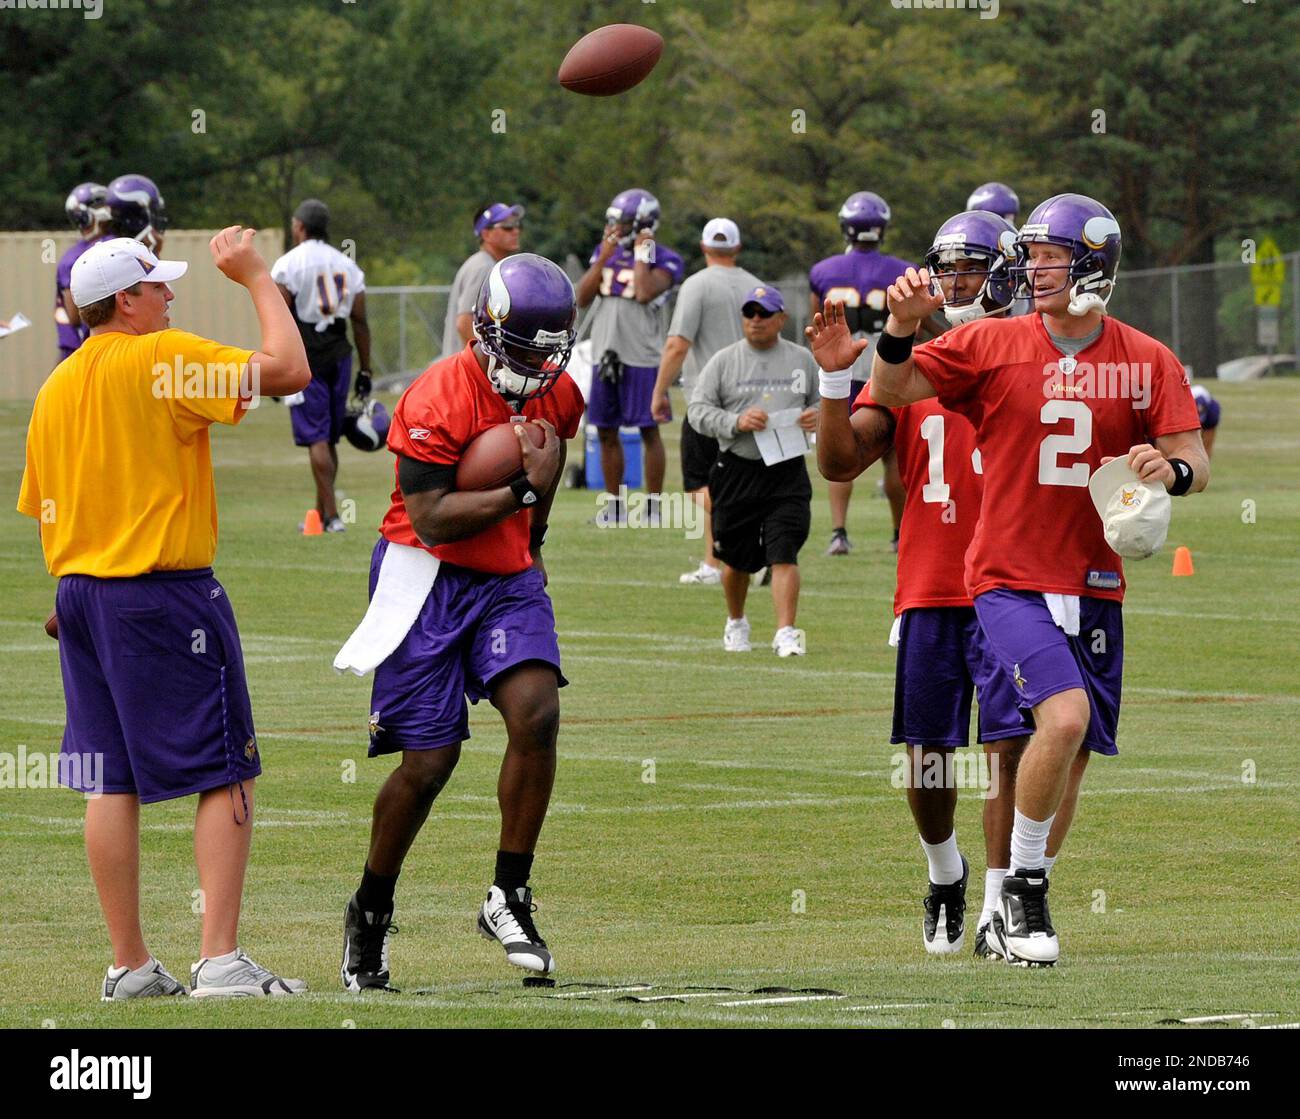 A ballboy lobs a ball as Minnesota Vikings quarterbacks Tarvaris